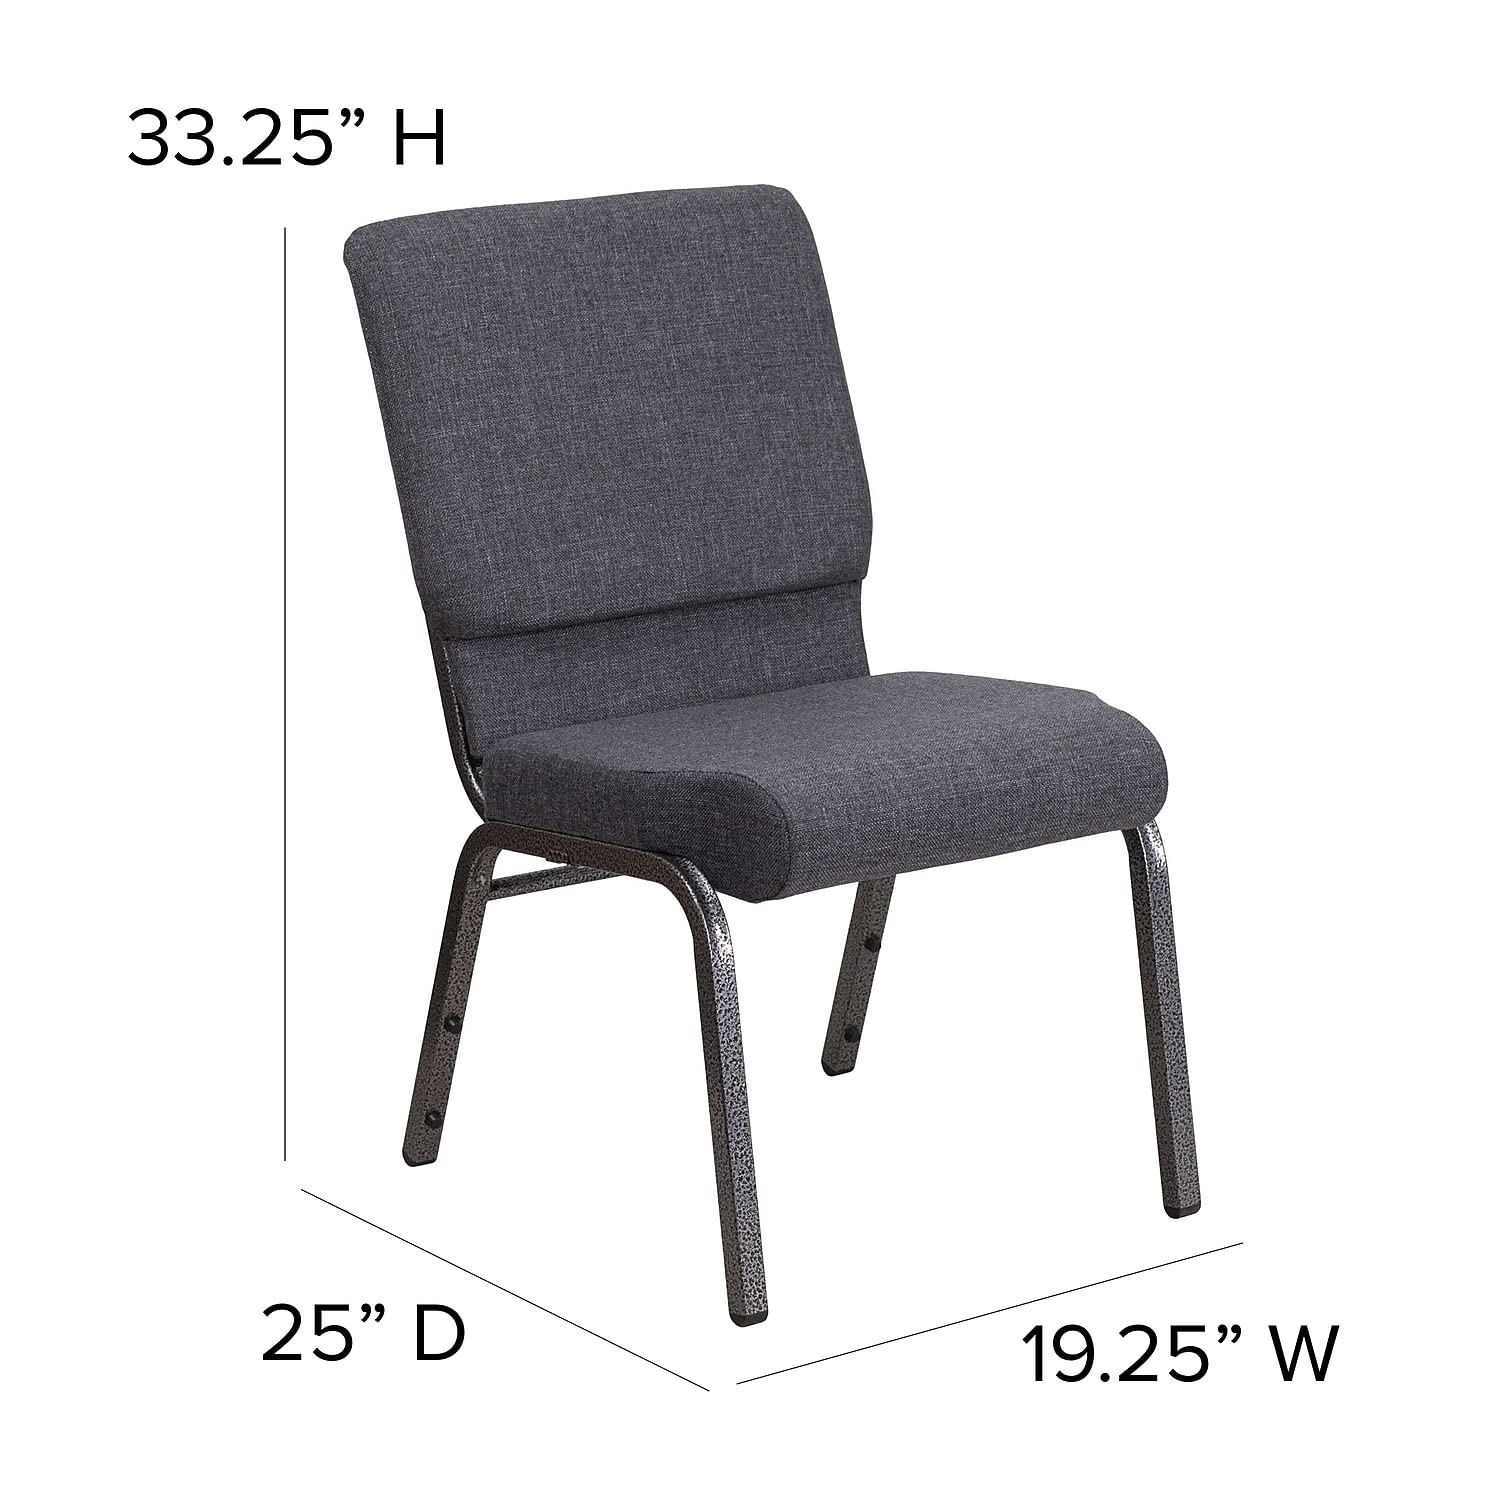 Flash Furniture 4 Pack HERCULES Series 18.5''W Stacking Church Chair in Dark Gray Fabric - Silver Vein Frame